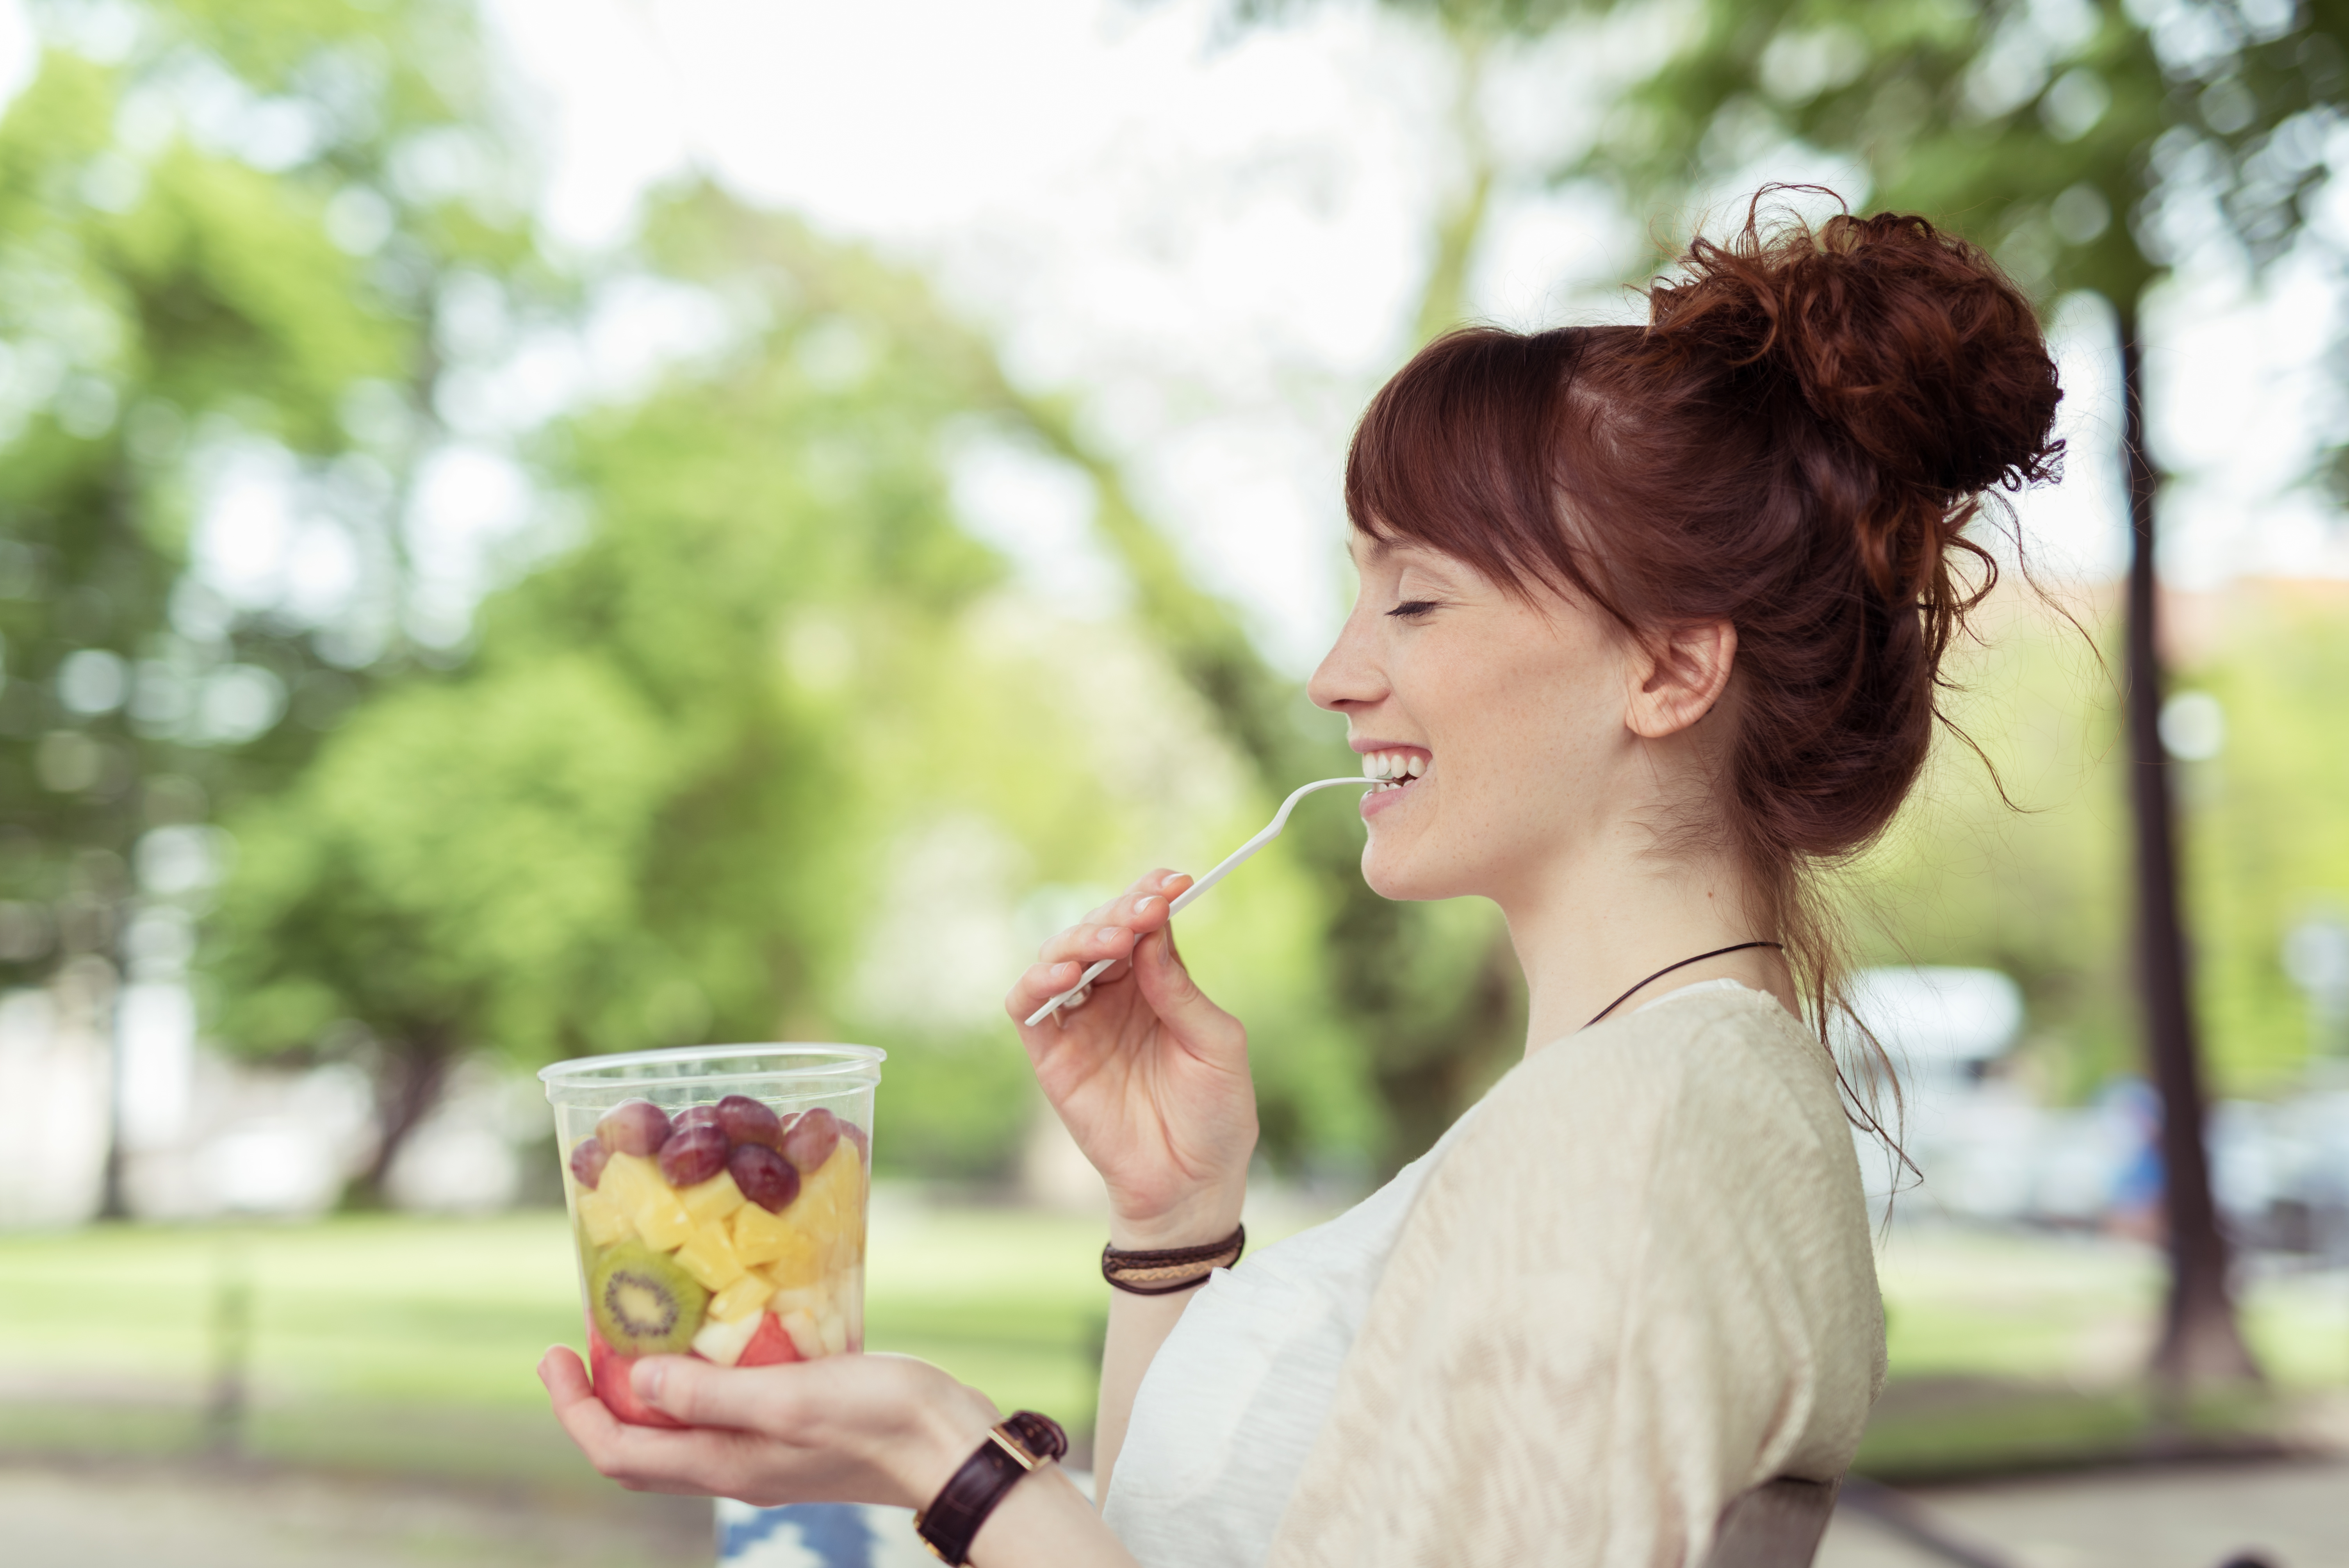 Woman eating fruit salad outdoors.